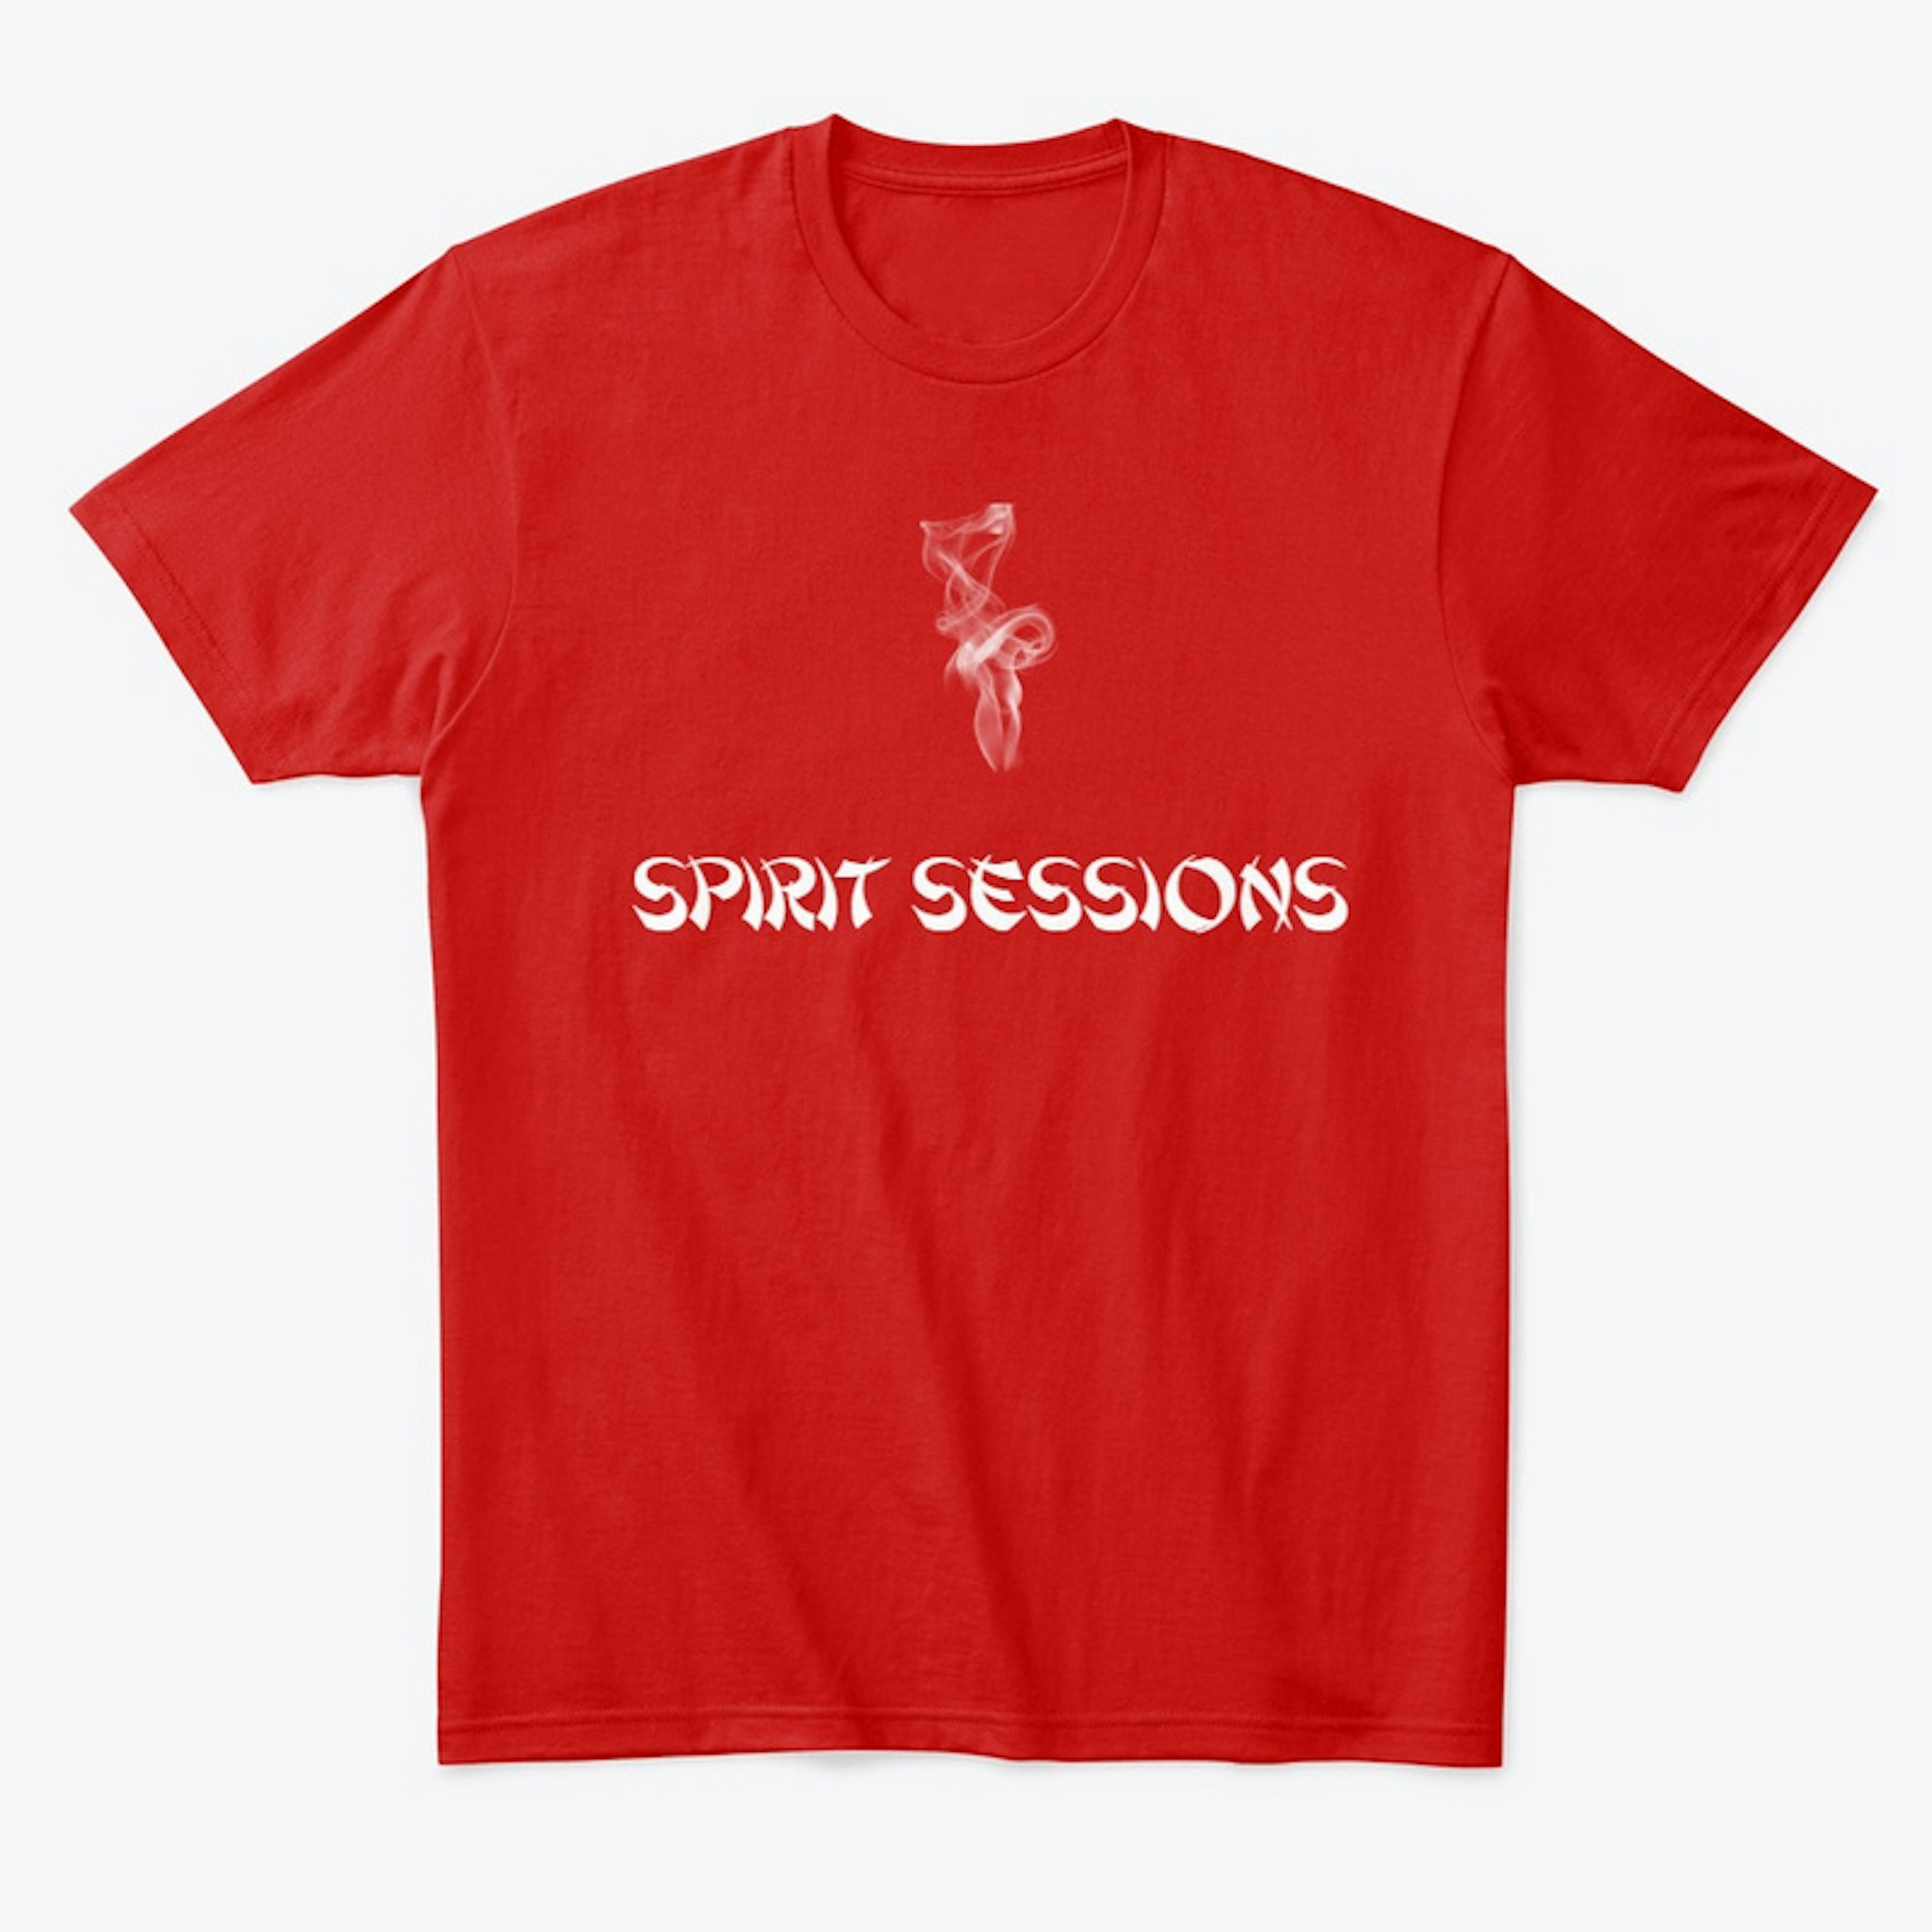 Spirit Sessions Tee